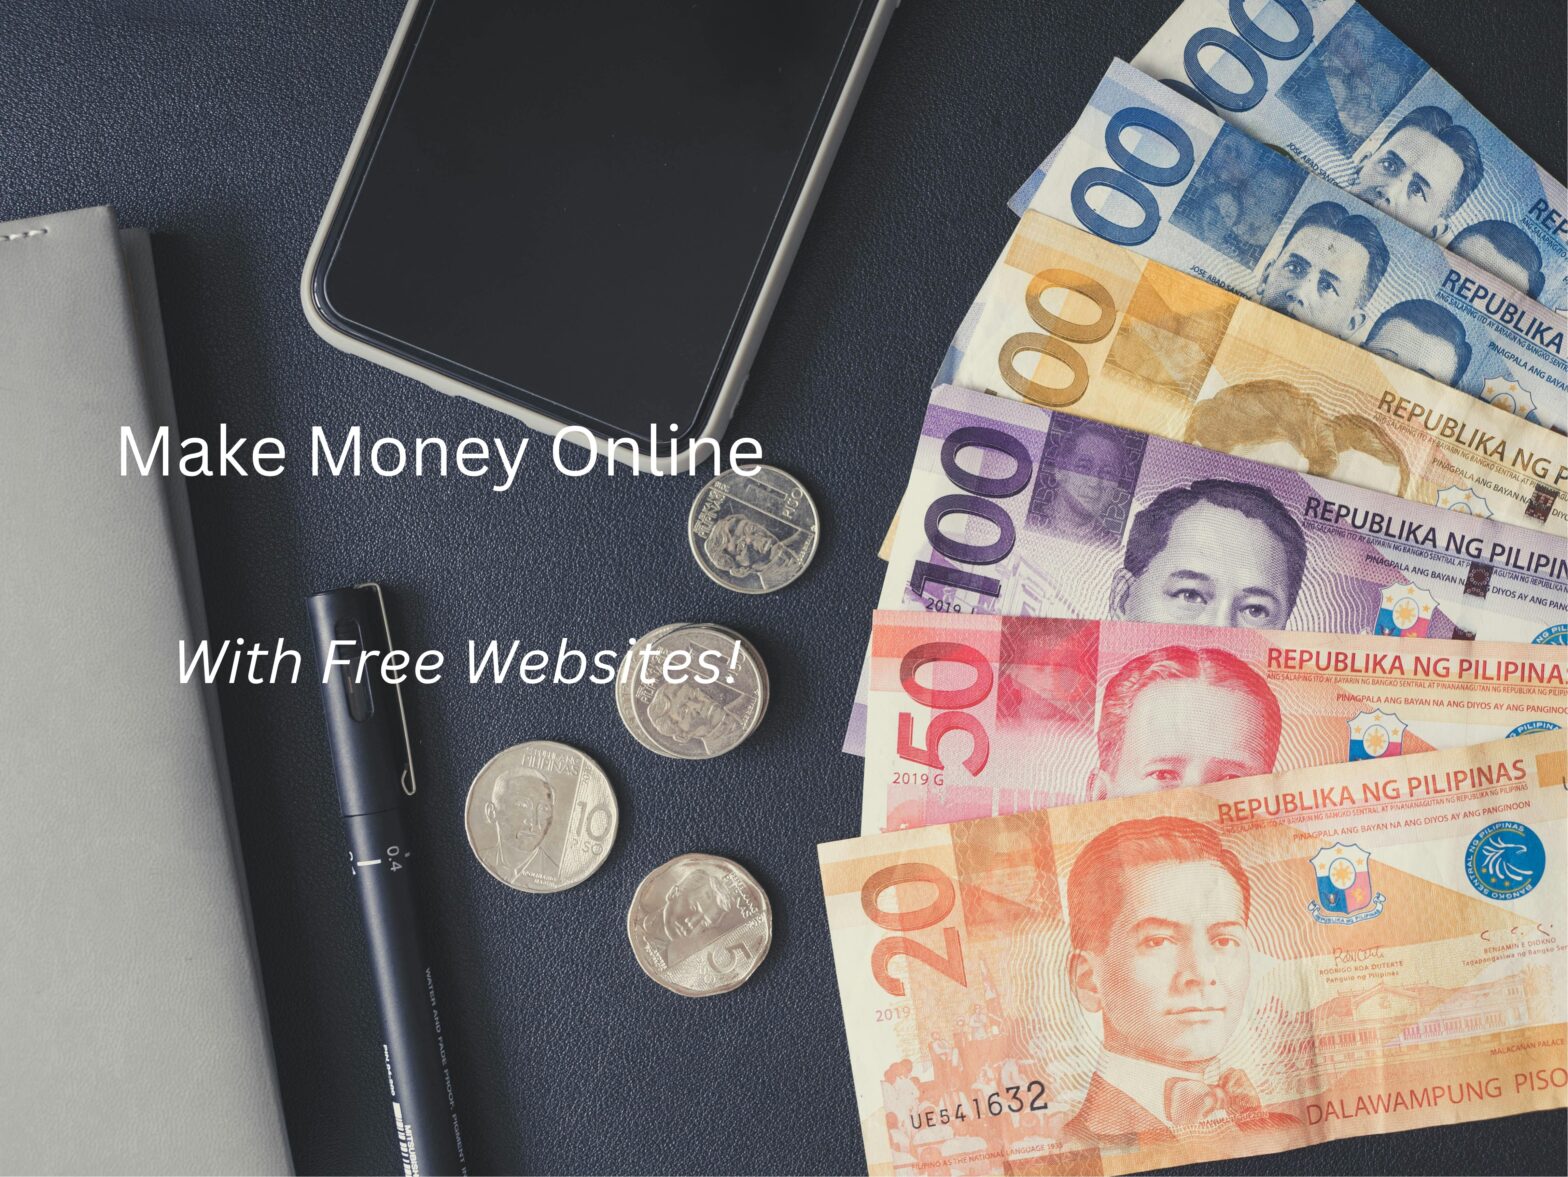 Make money online with free websites